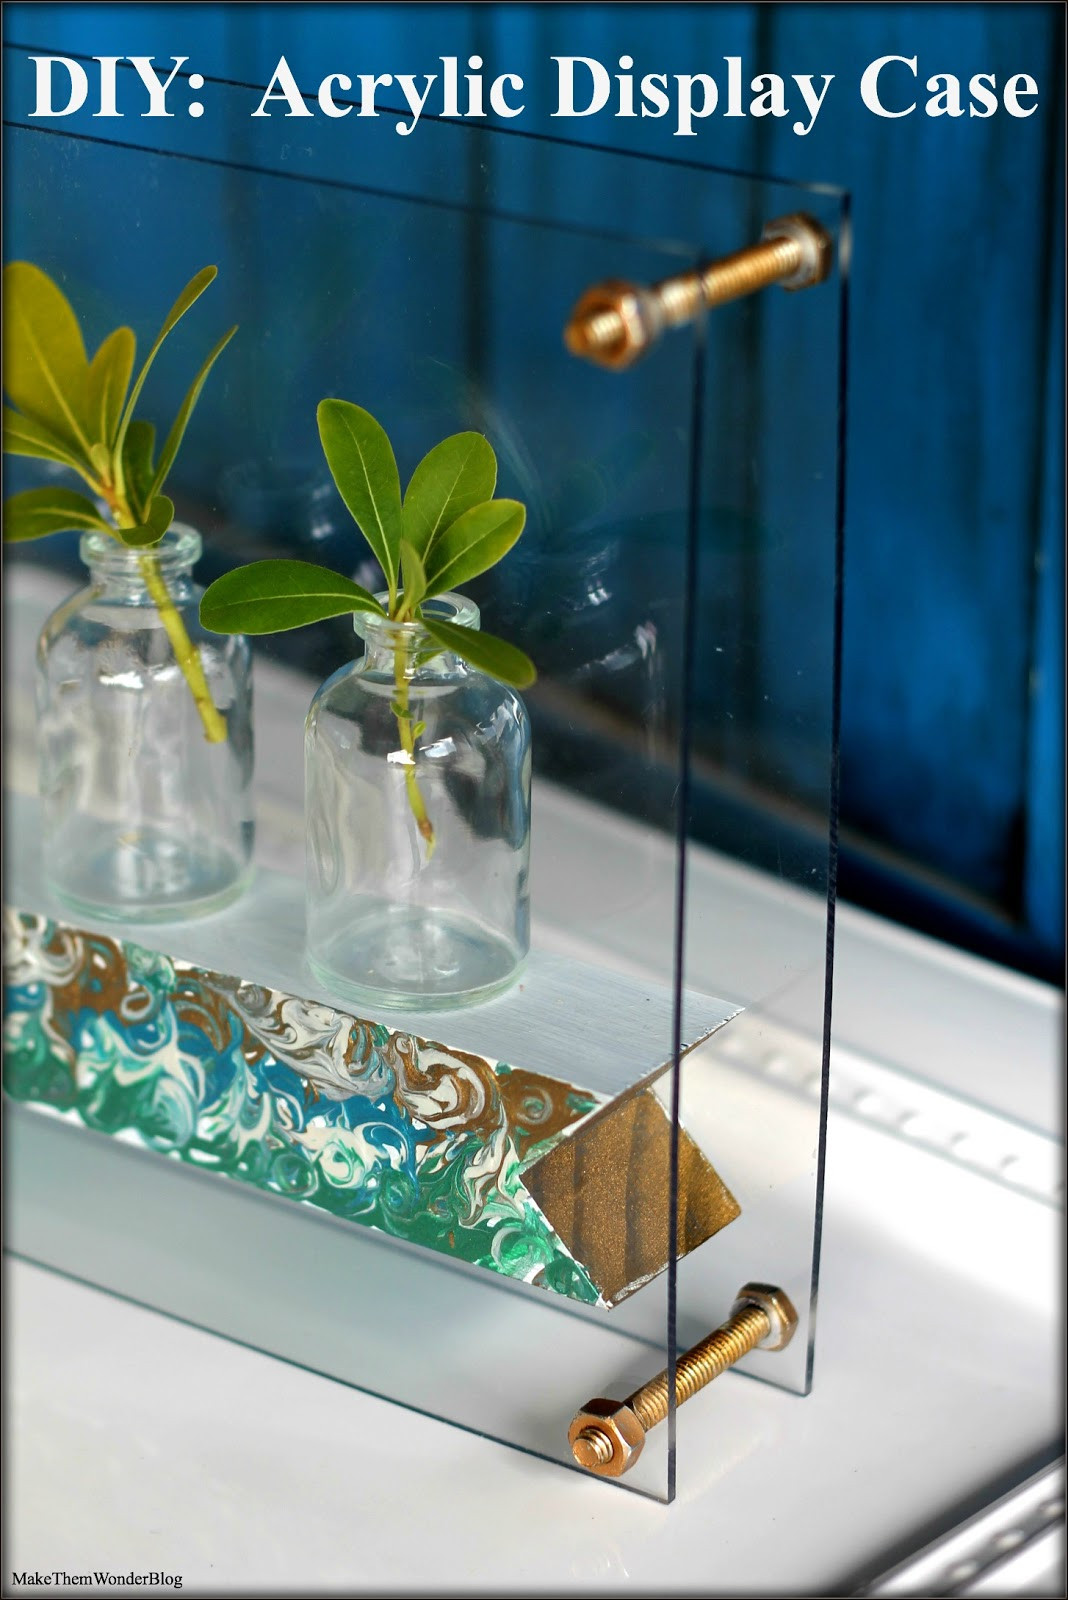 Best ideas about DIY Plexiglass Box
. Save or Pin Make Them Wonder DIY Acrylic Display Case Now.